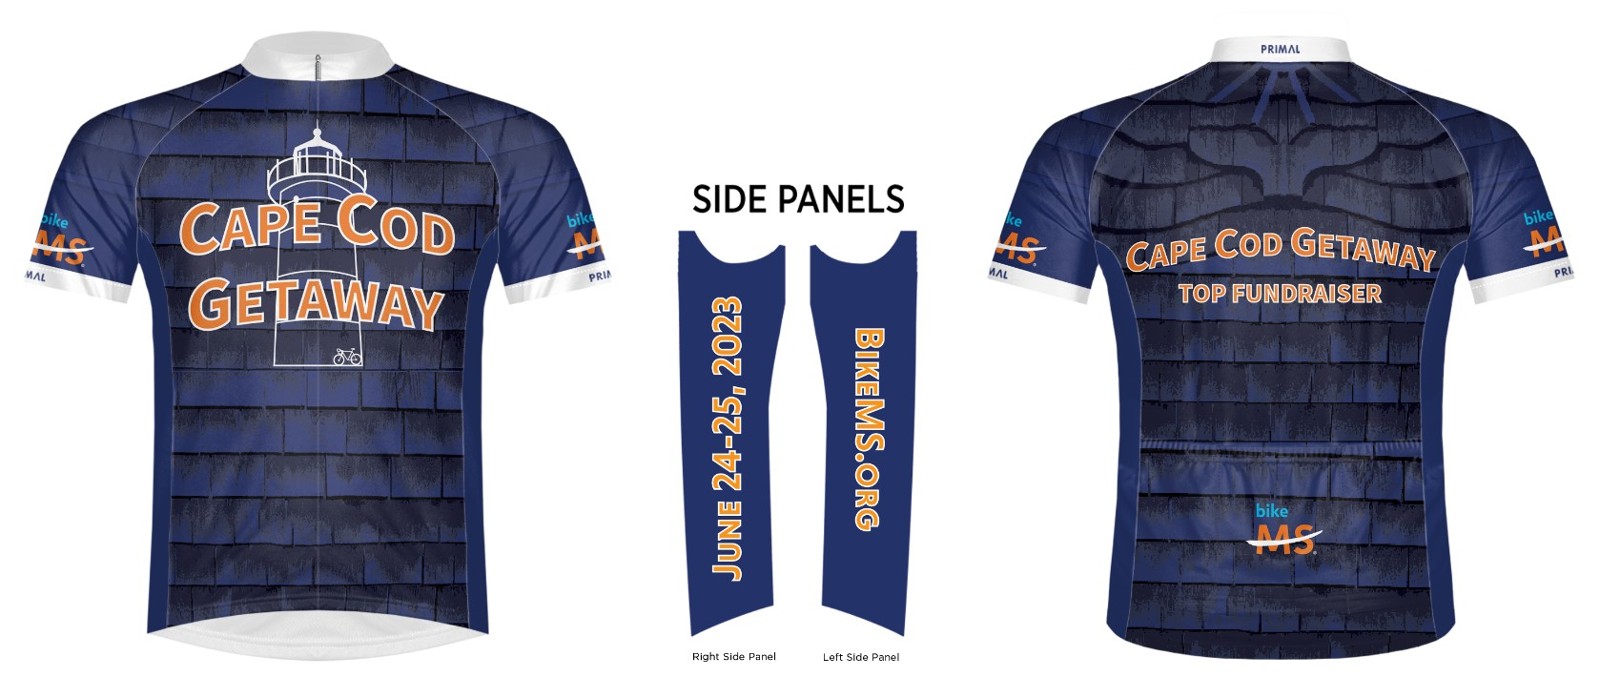 2023 Bike MS Cape Cod Getaway Top Fundraiser jersey